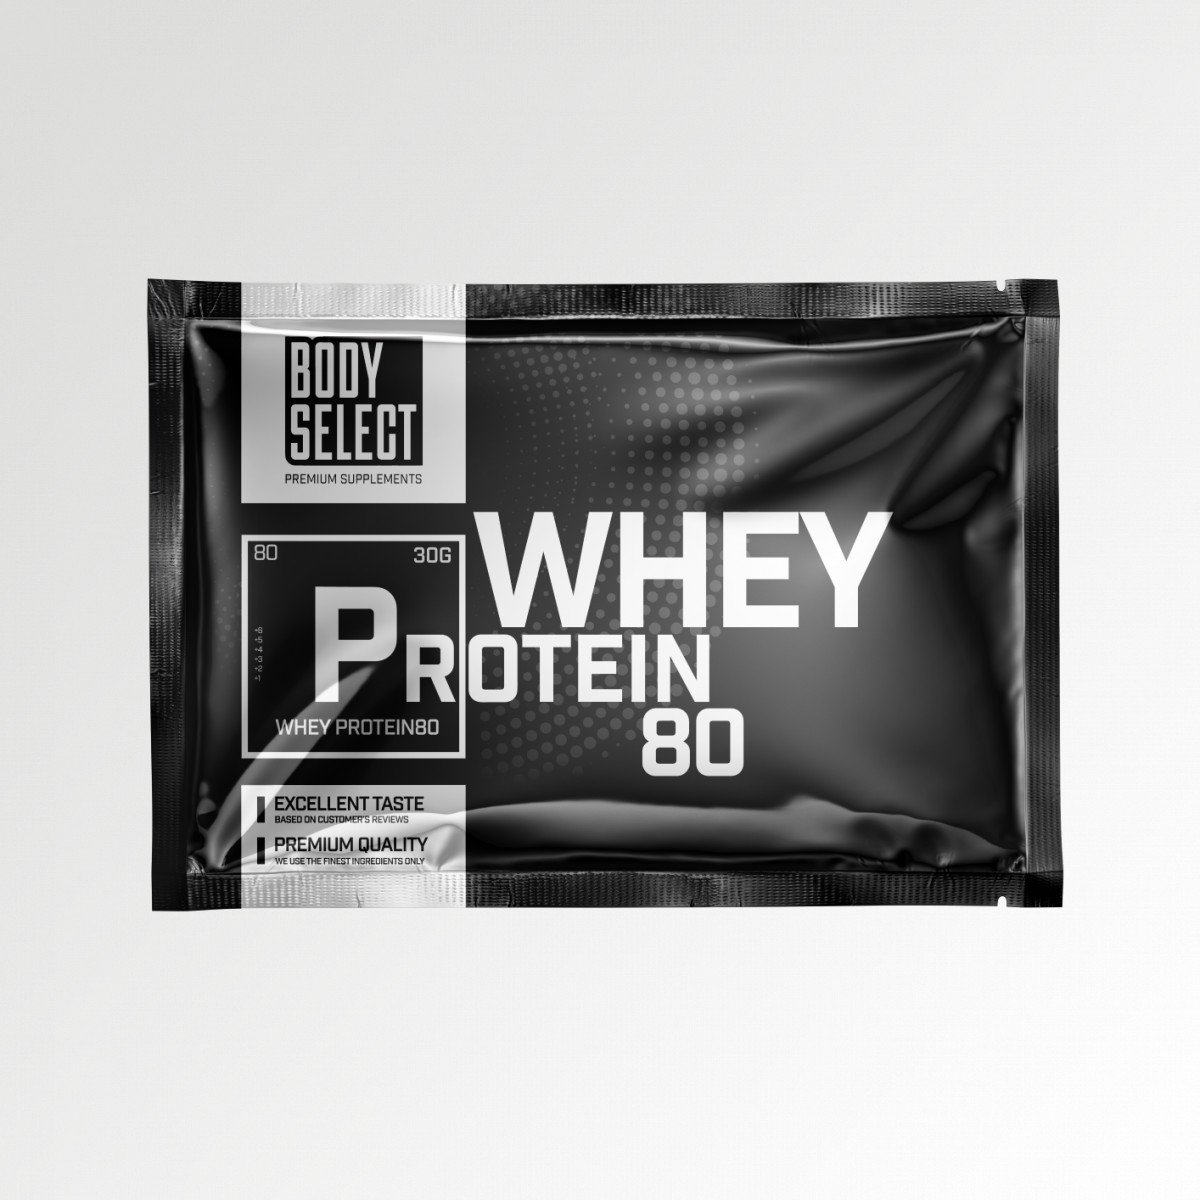 Whey Protein 80